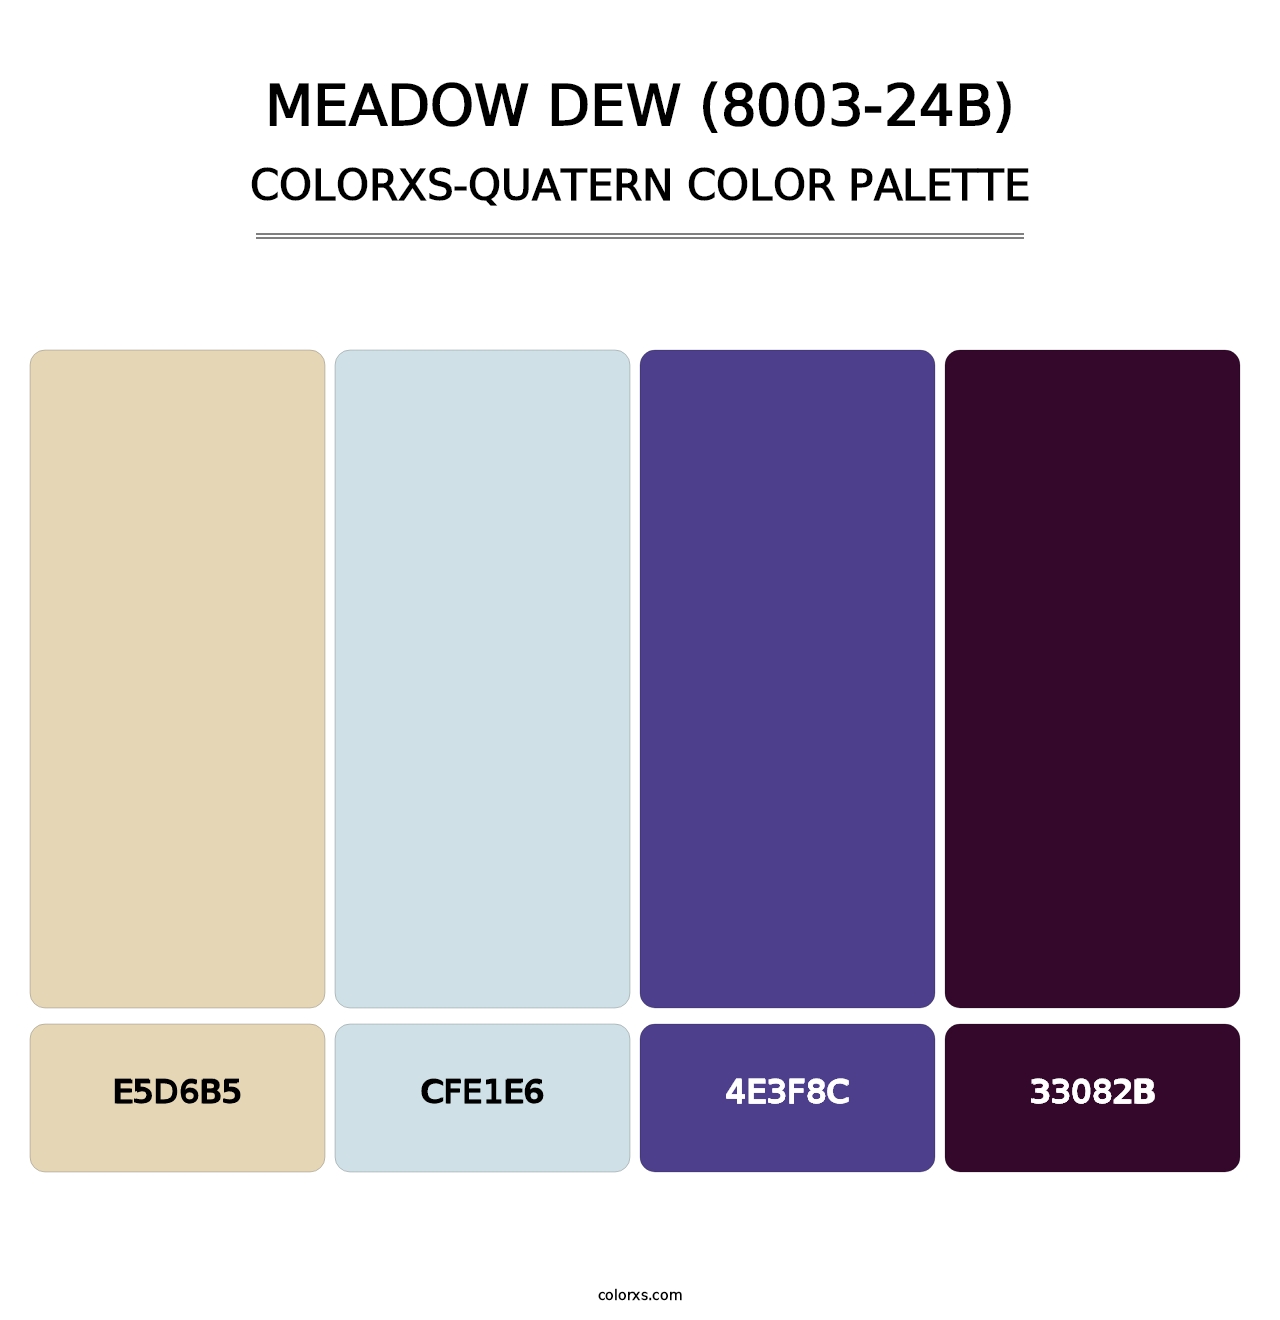 Meadow Dew (8003-24B) - Colorxs Quatern Palette